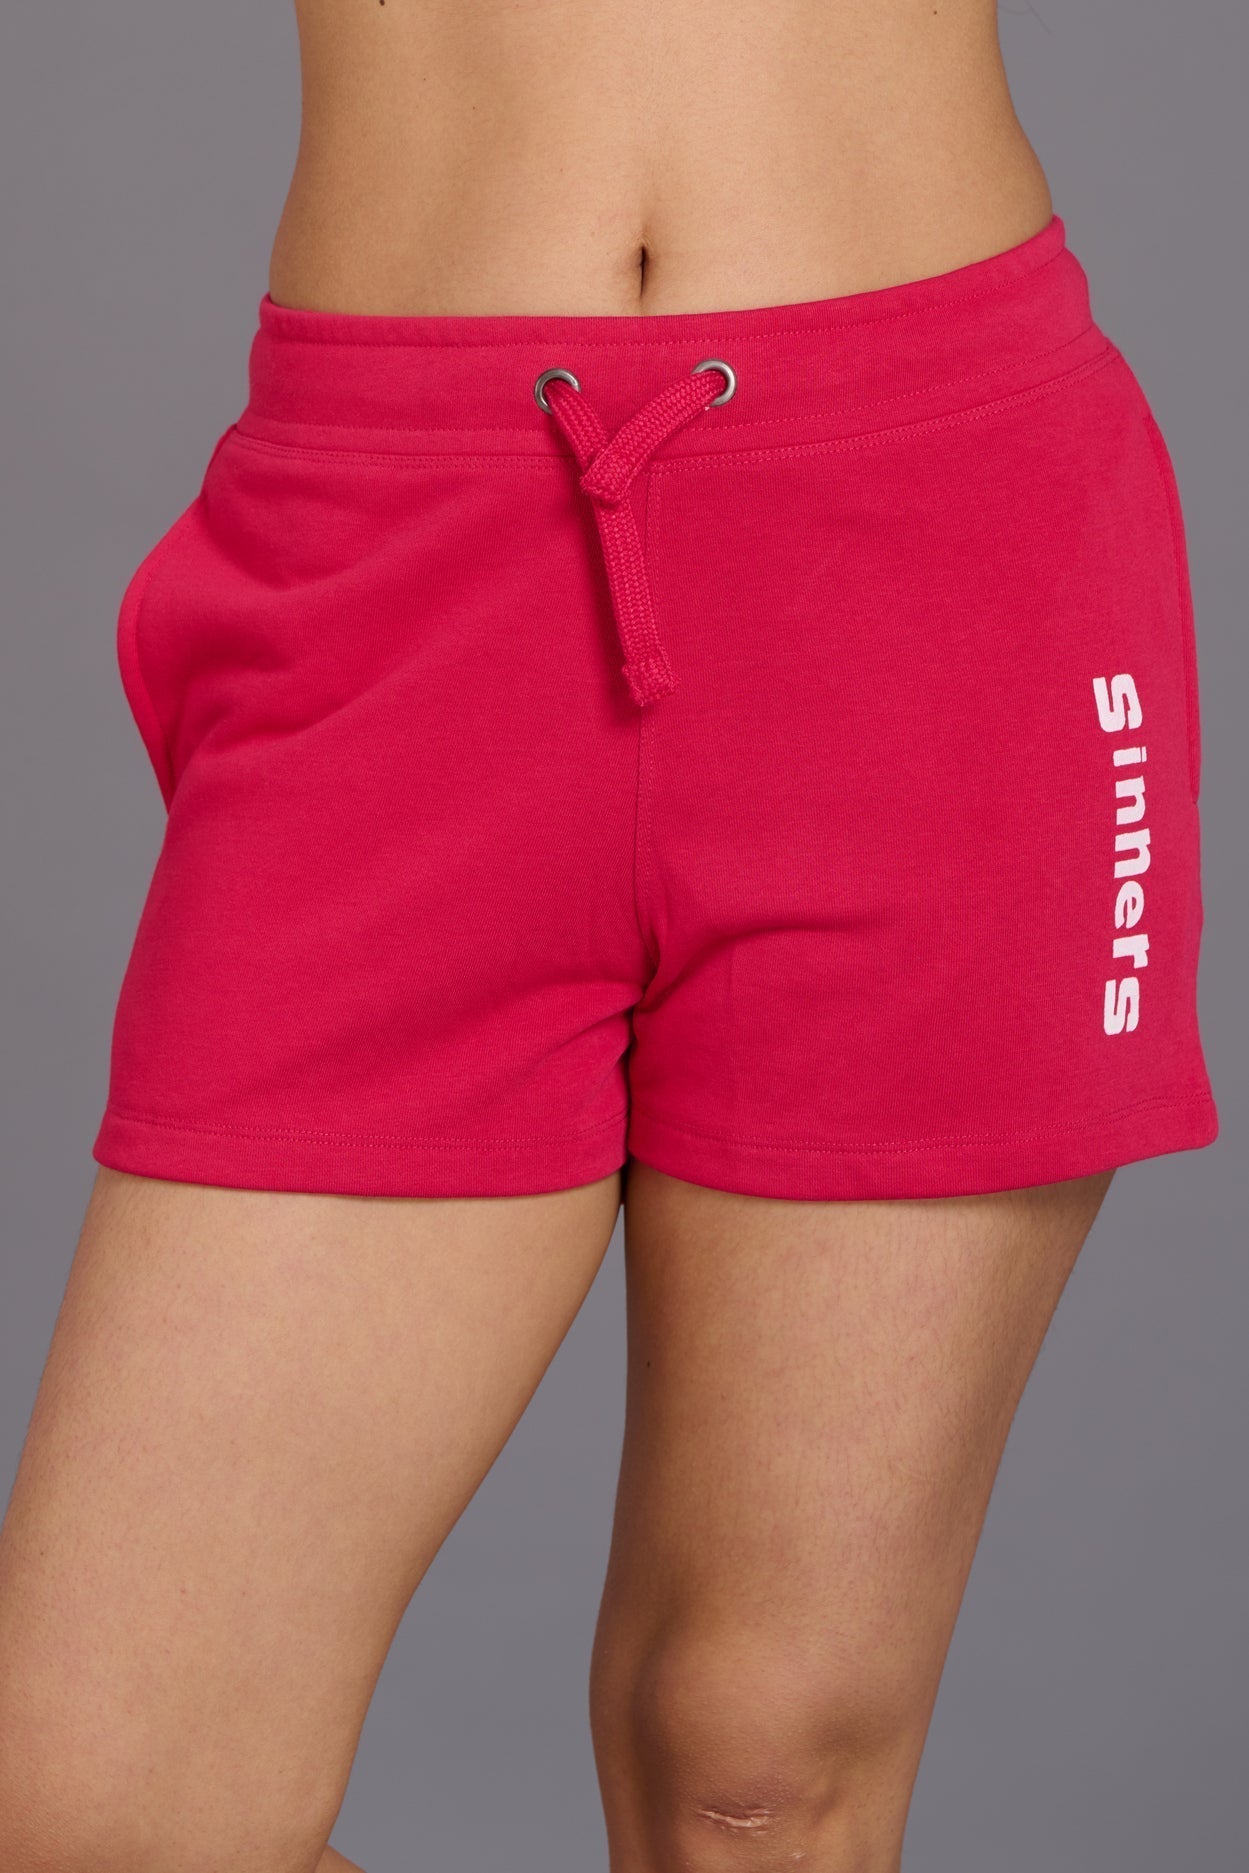 Sinner Printed Red Cotton Shorts for Women - Go Devil